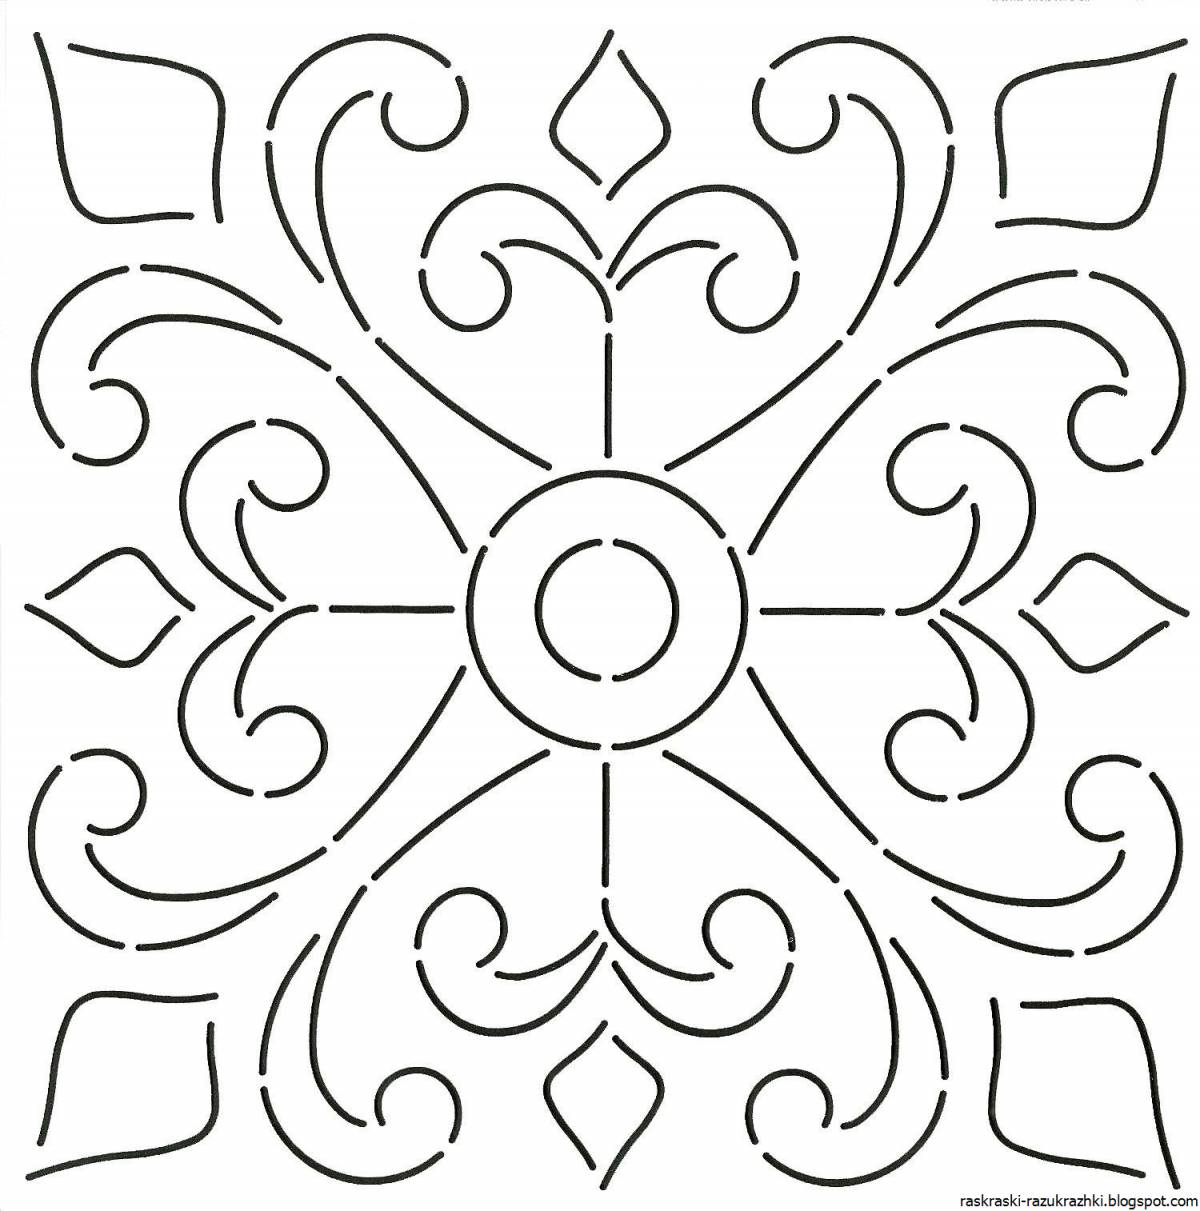 Joyful ceramic tile coloring page